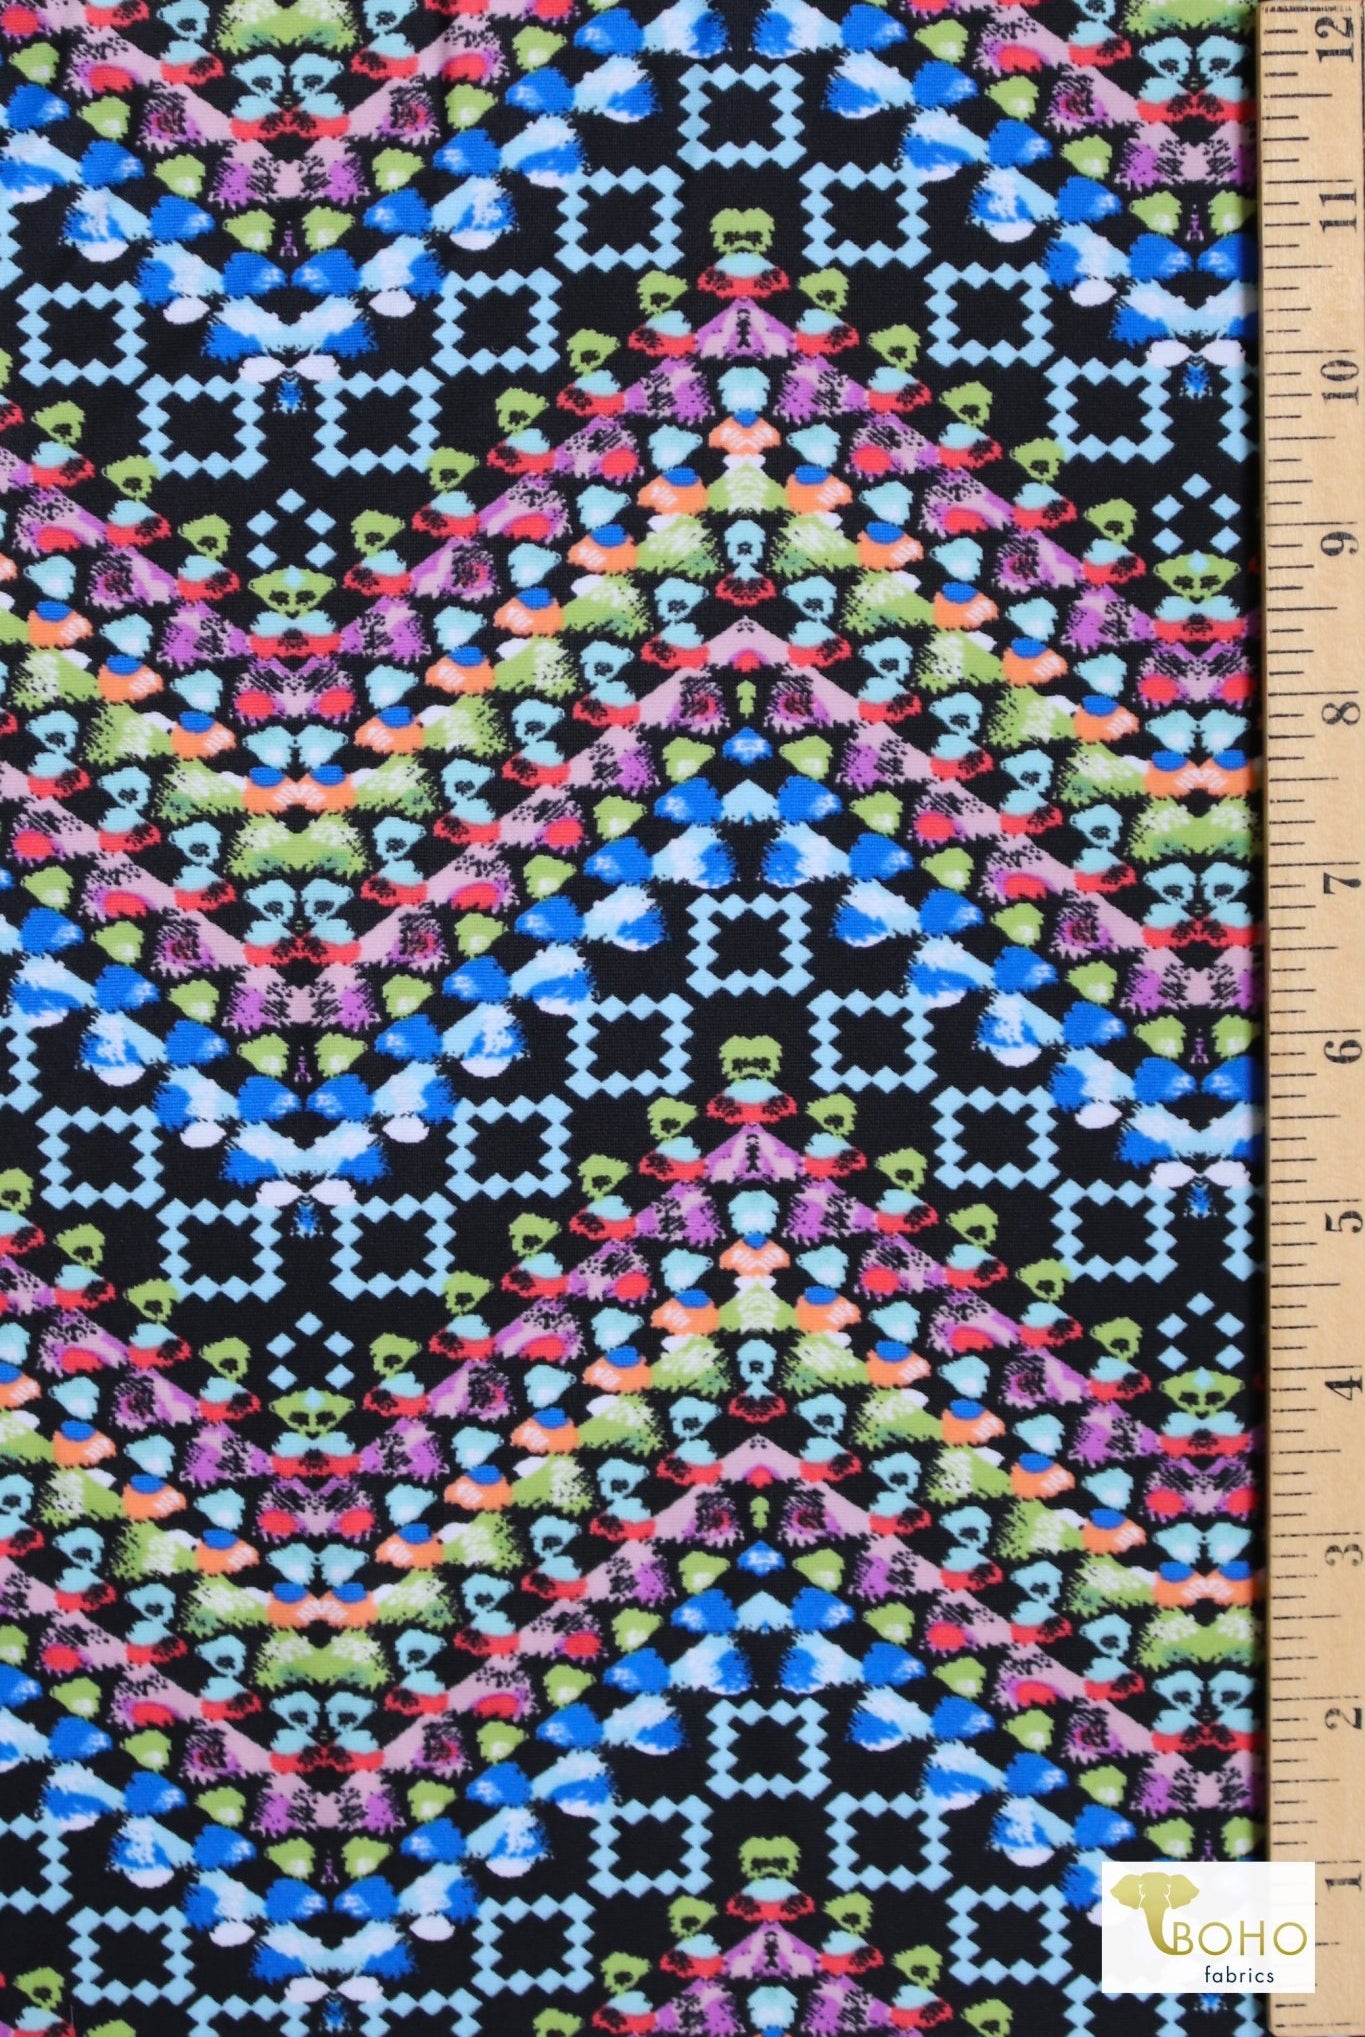 Rainbow Droplets Chevron, Swim/Athletic Knit Fabric - Boho Fabrics - Swim Knit, Printed Fabric